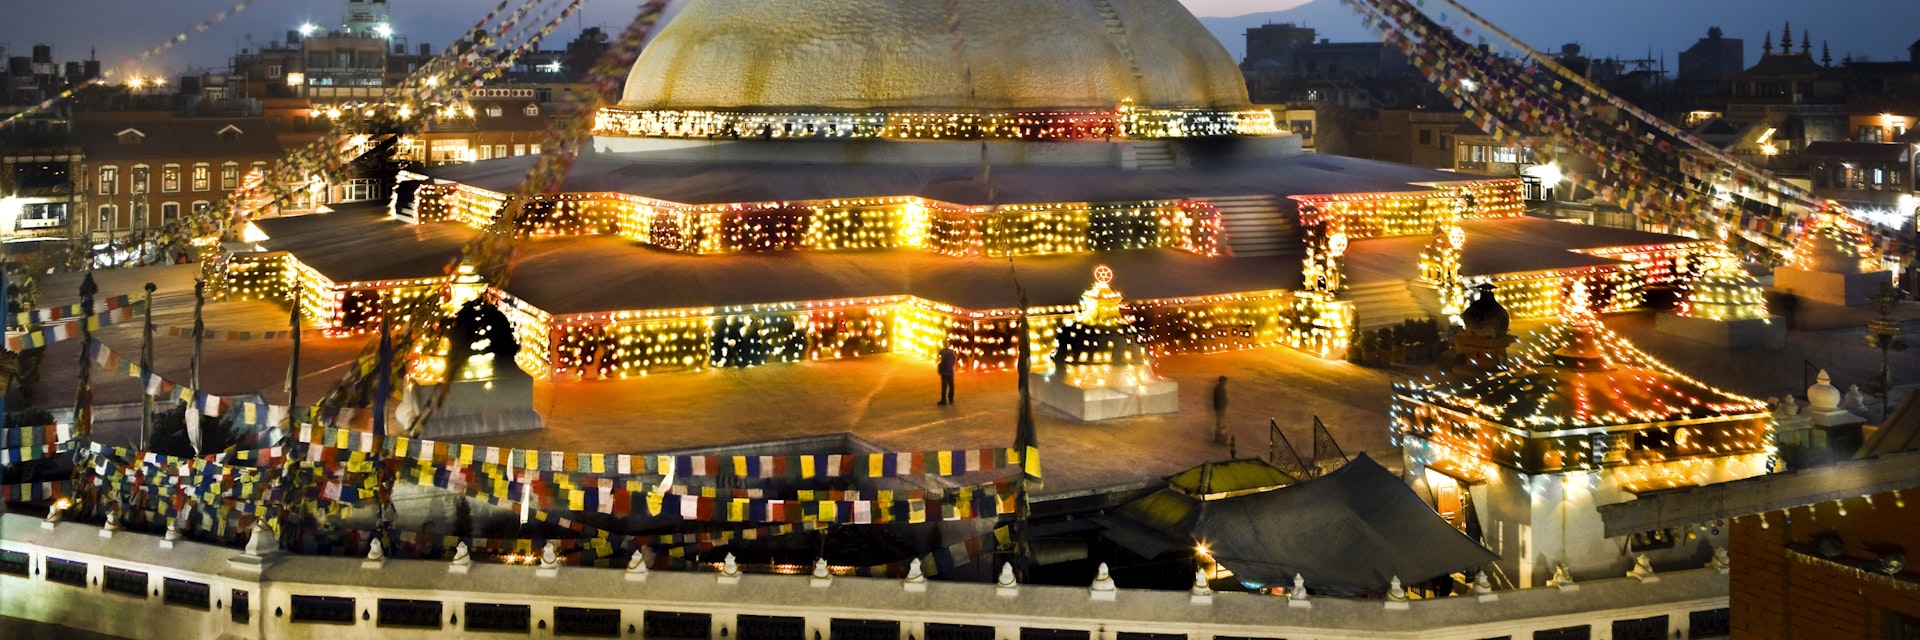 Nepal, Kathmandu Valley, Bodhnath Stupa, the Buddha's eyes and prayer flags viewed at twilight with decorative lights